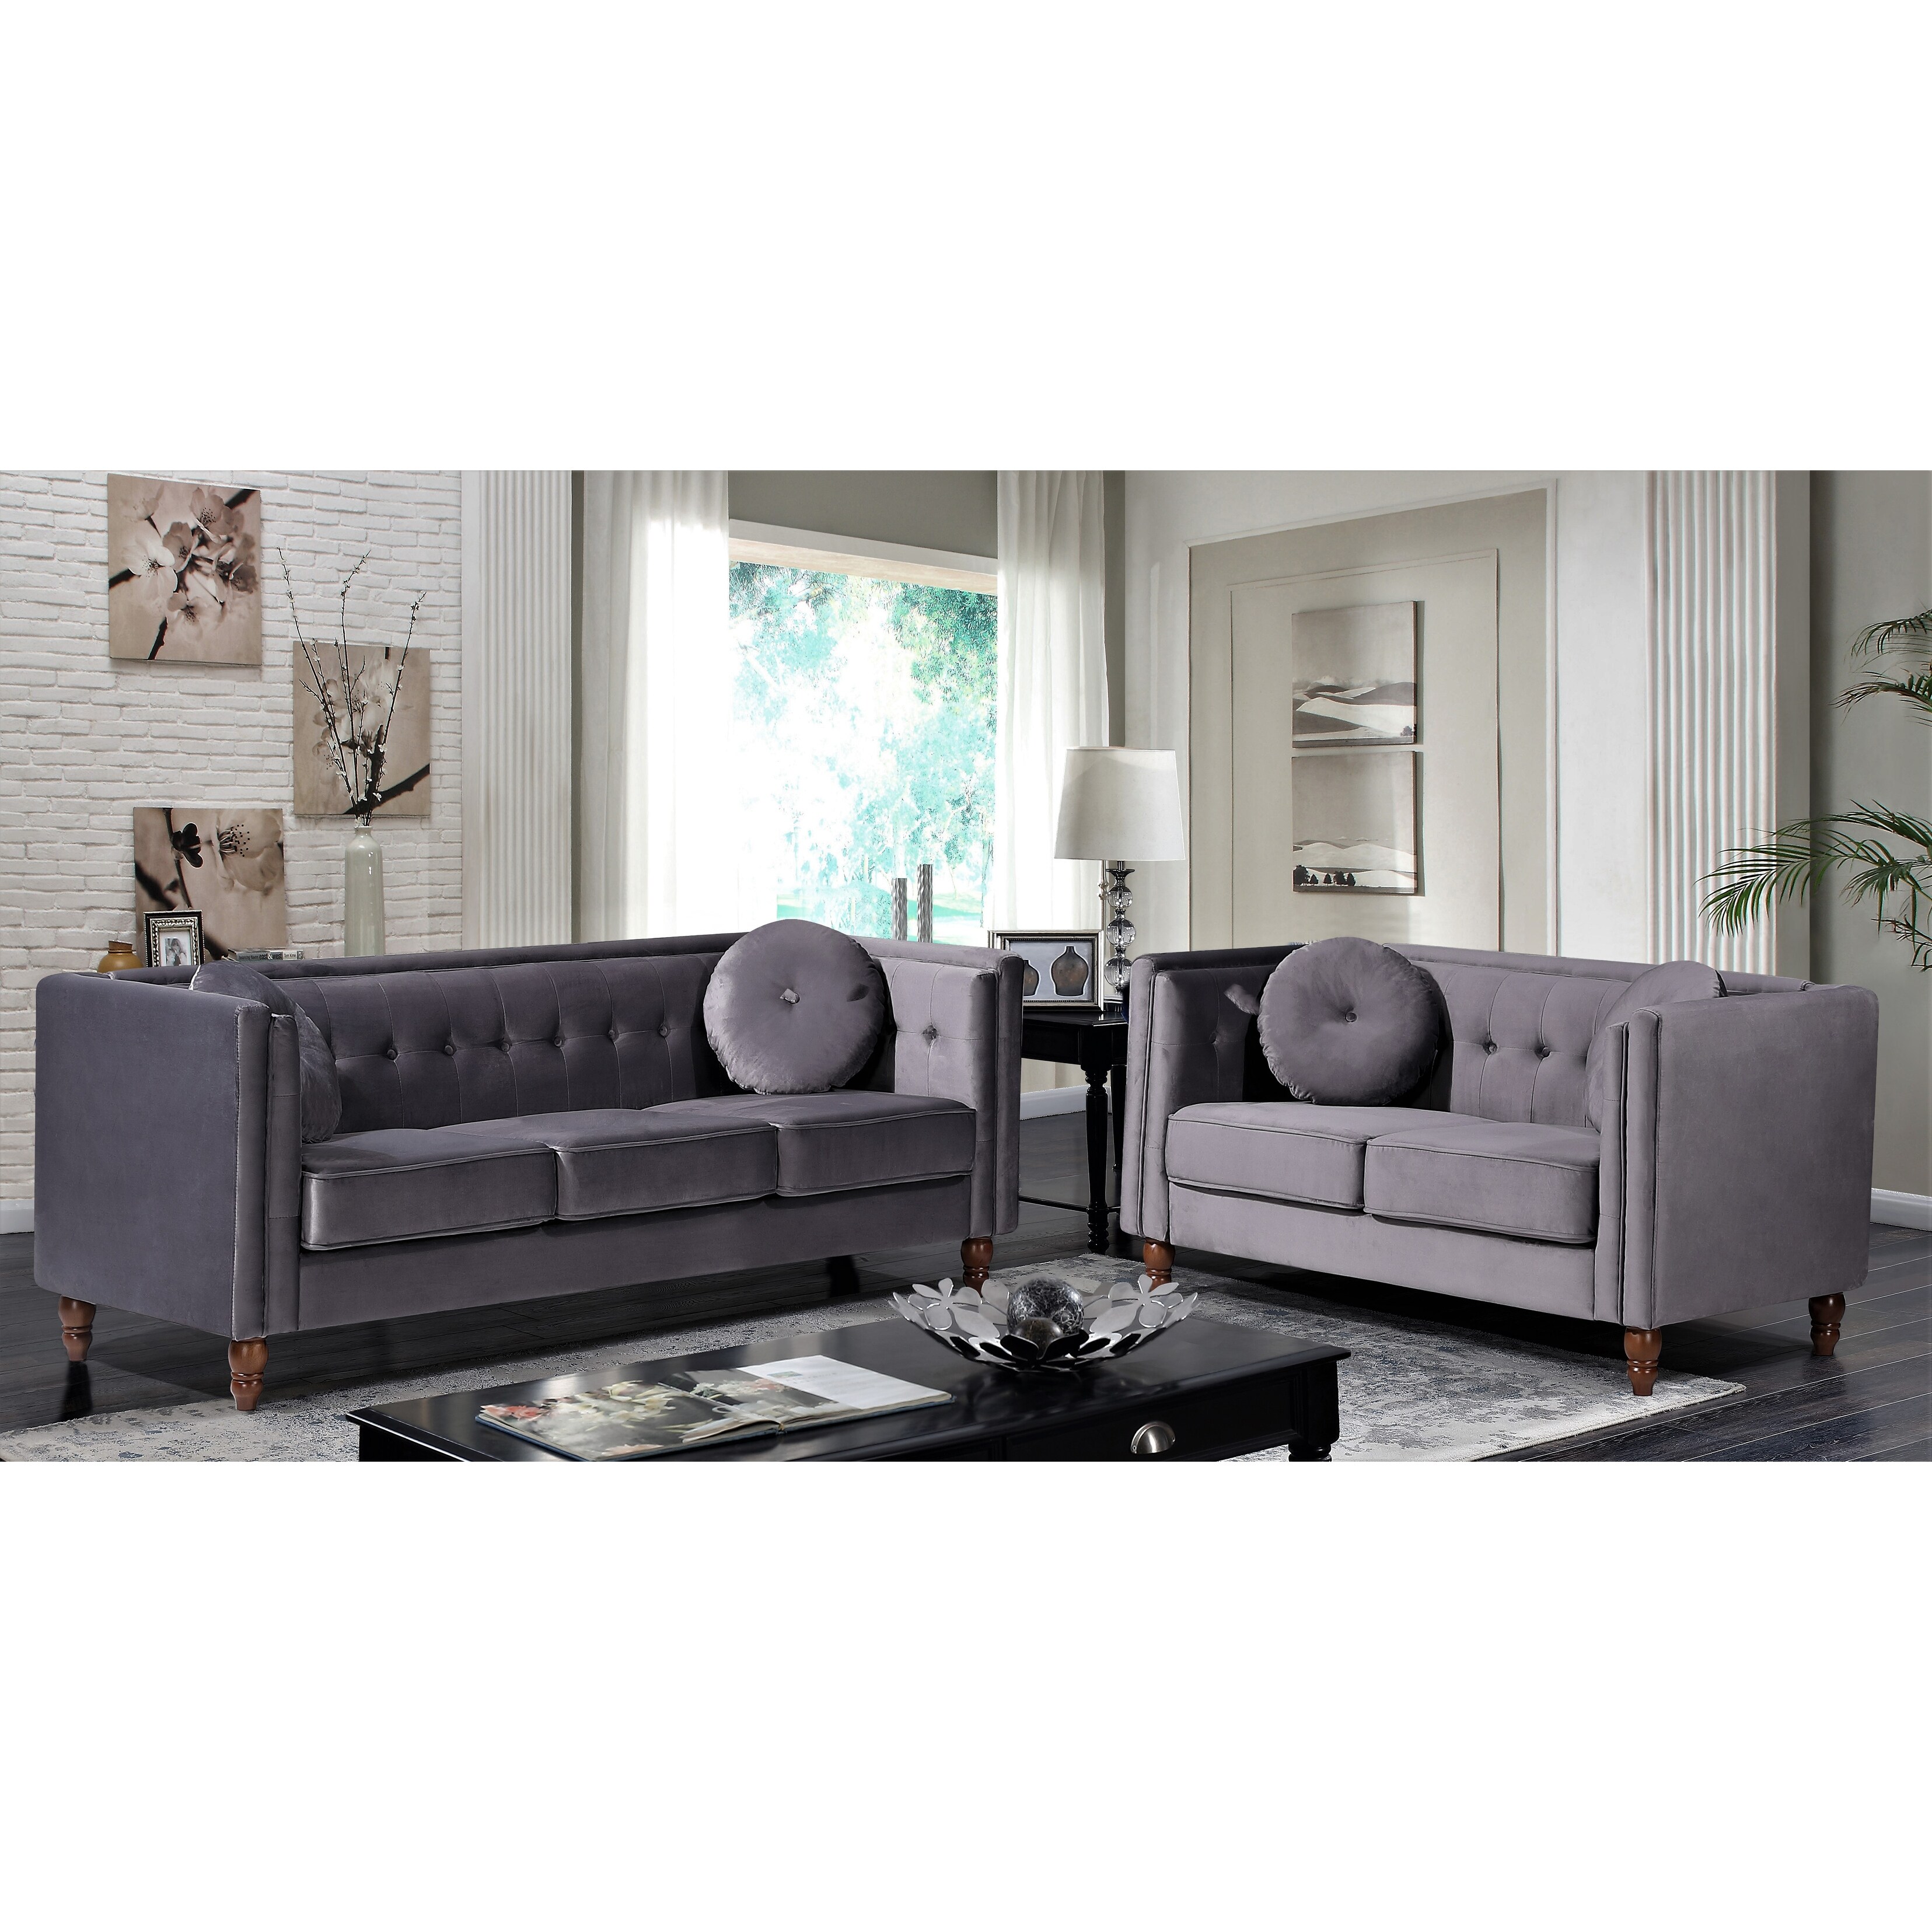 Uspridefurniture Villeda Velvet 2 PCS Living Room Set, Sofa